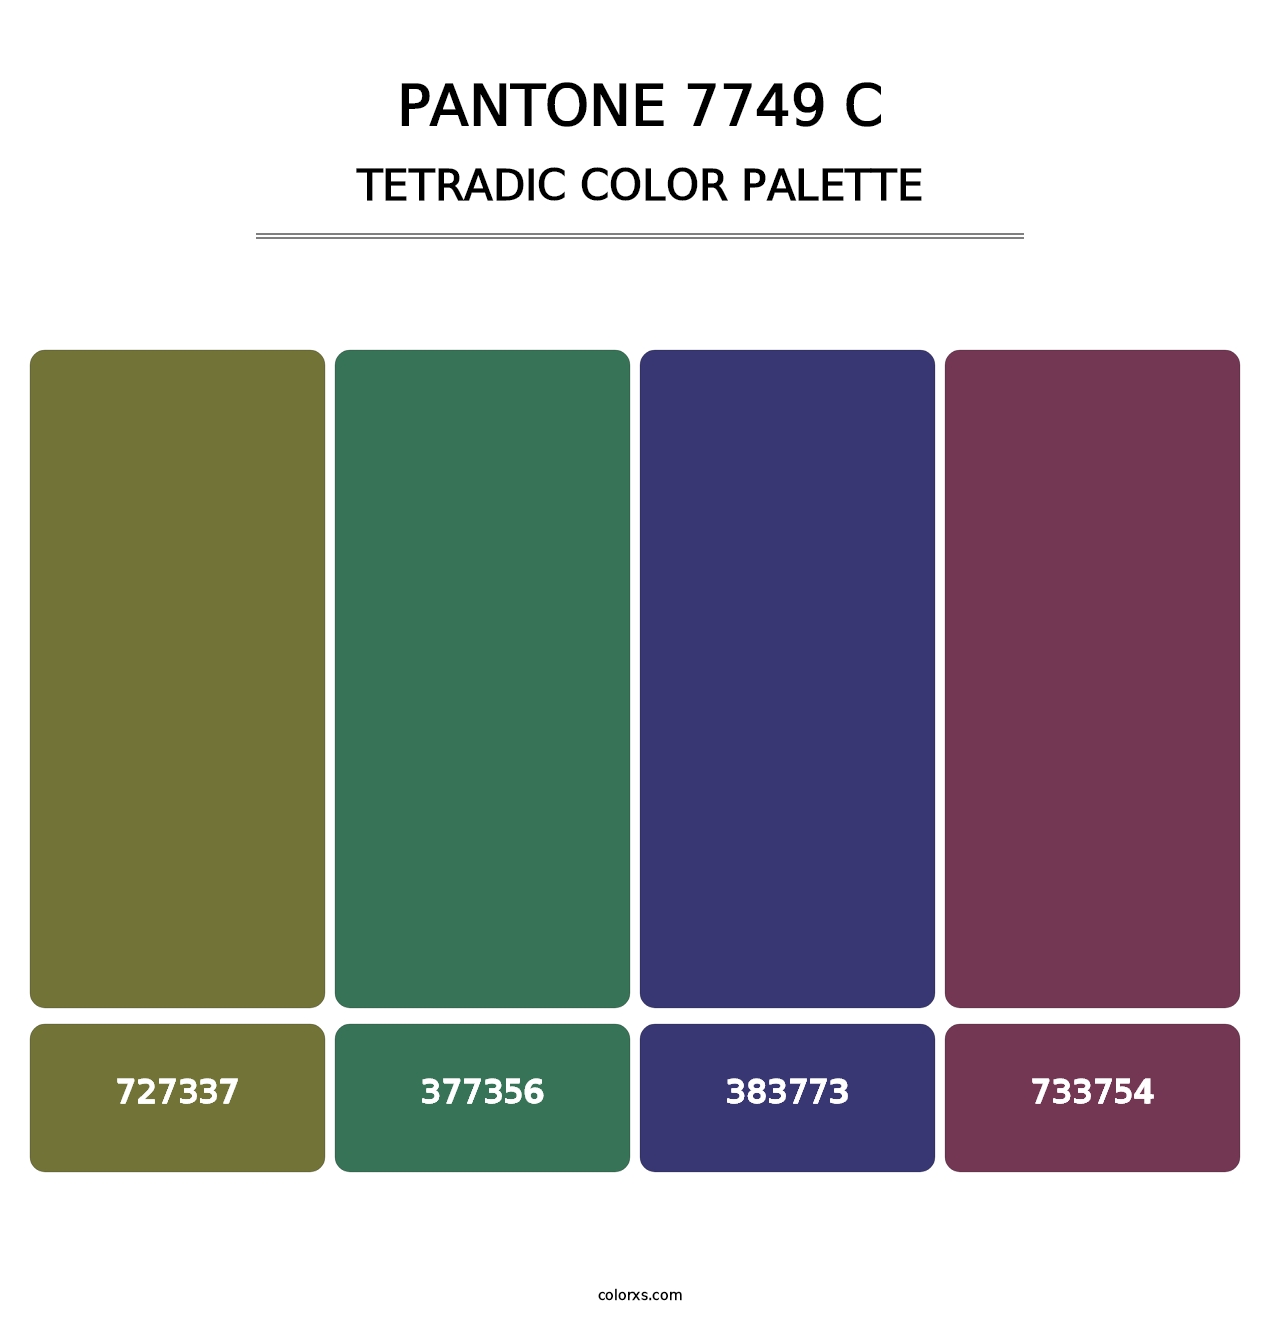 PANTONE 7749 C - Tetradic Color Palette